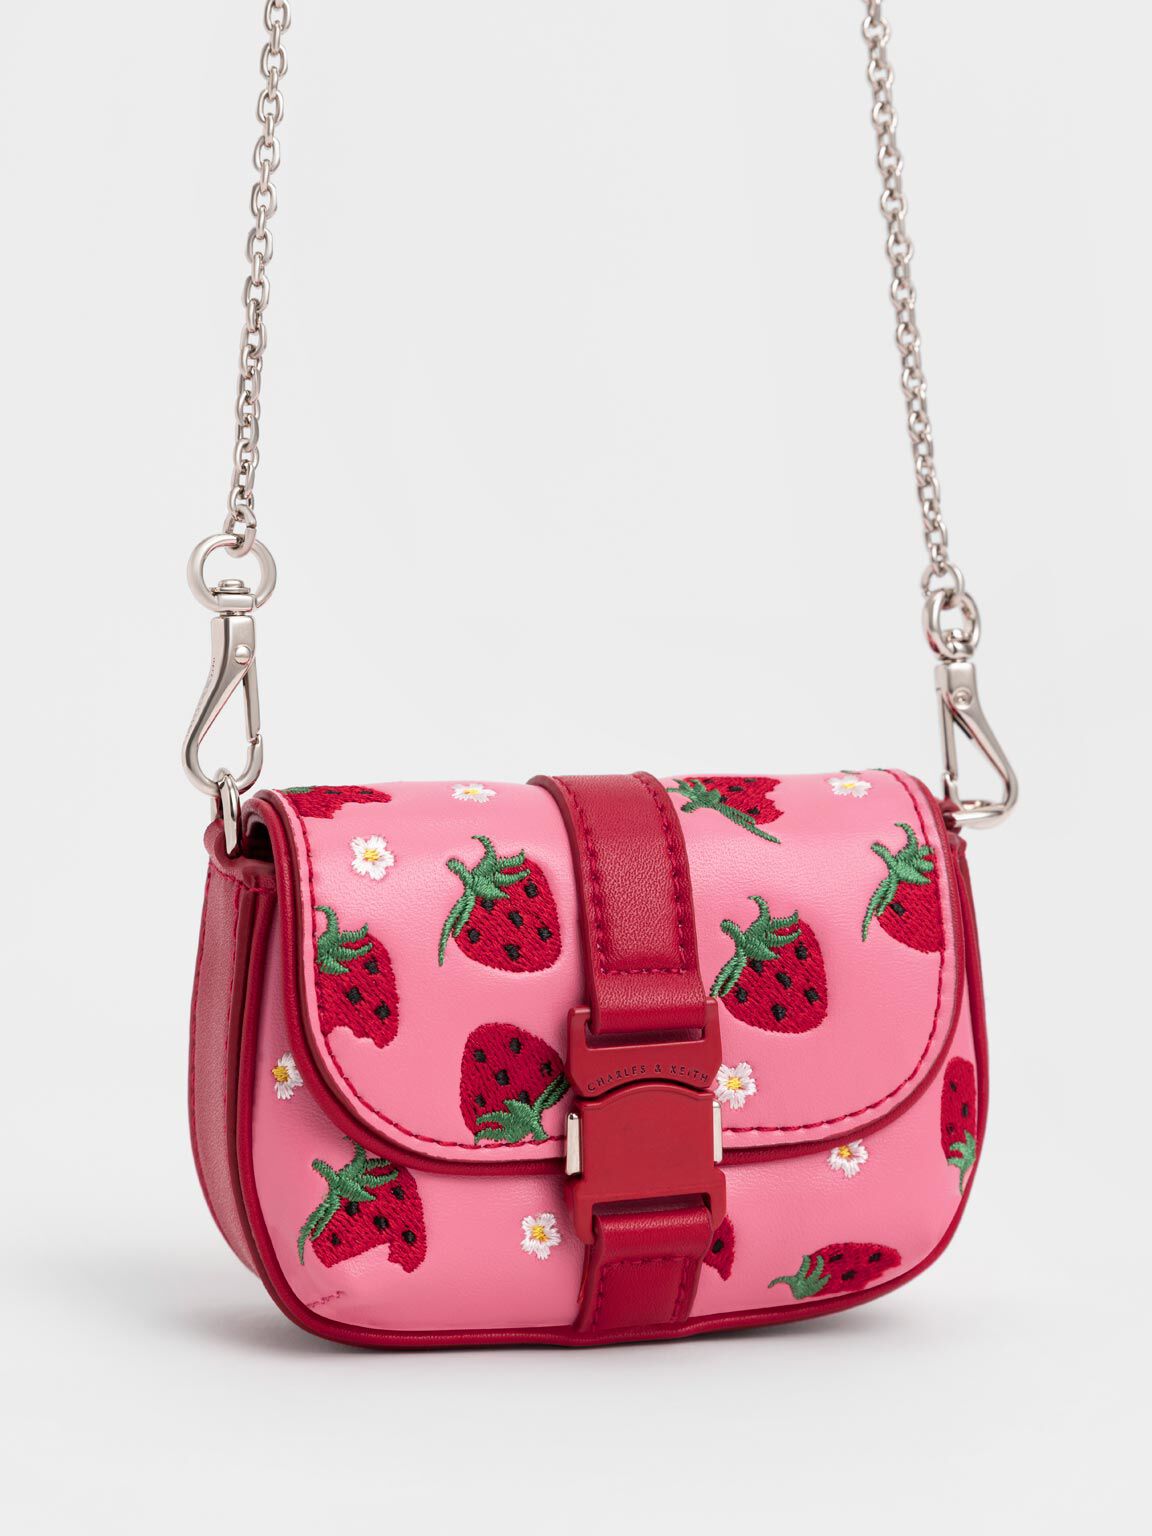 Zetta Belt Buckle Strawberry-Print Mini Bag, Pink, hi-res